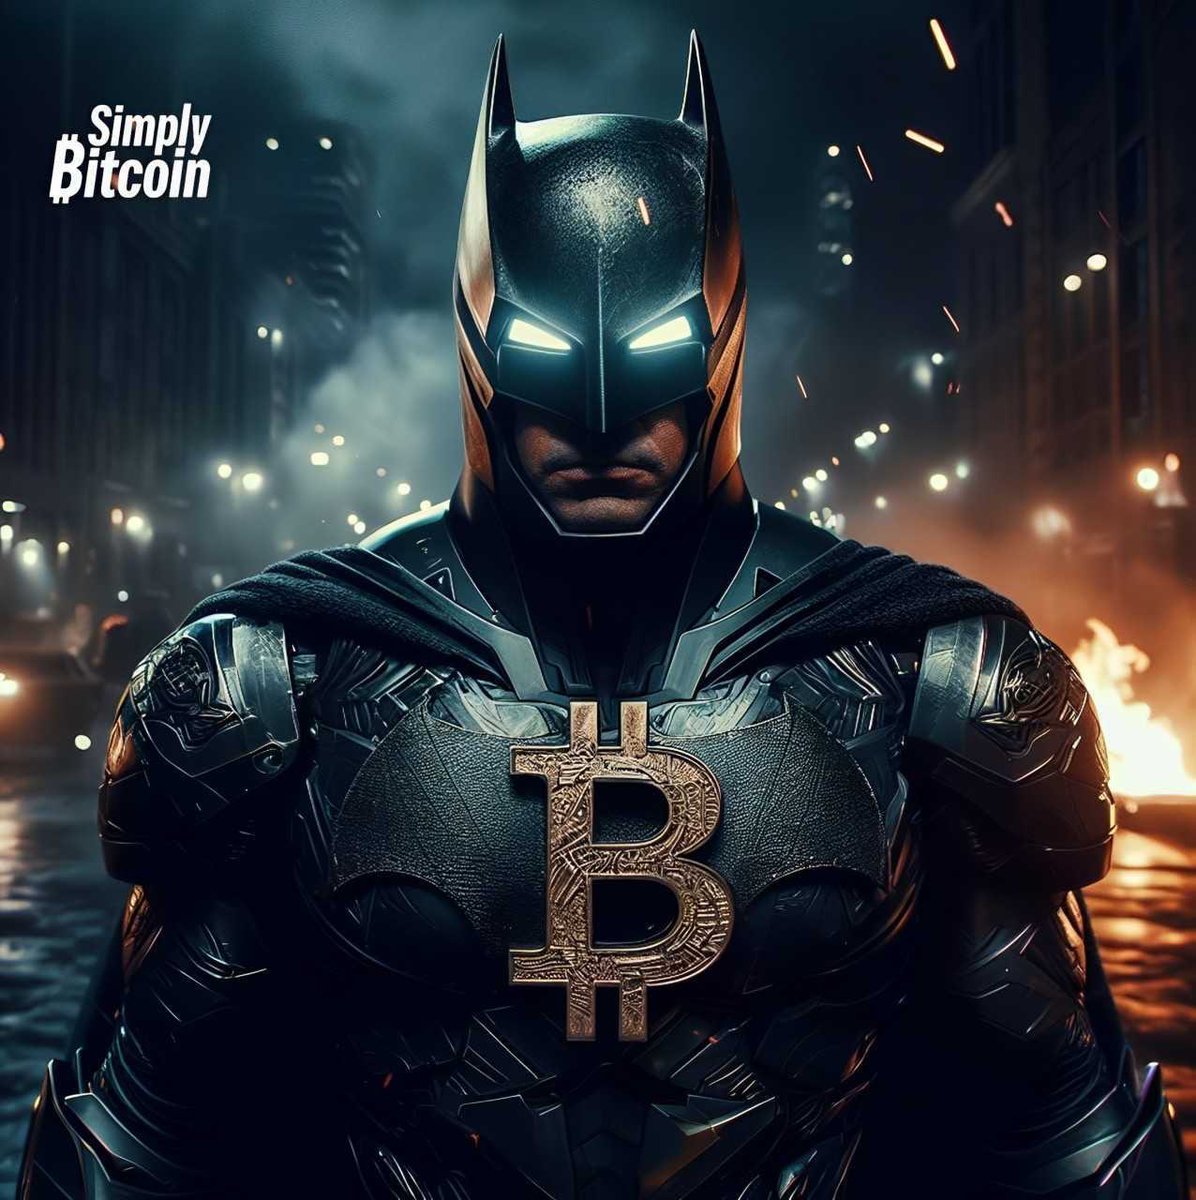 #Bitcoin is the Dark Knight